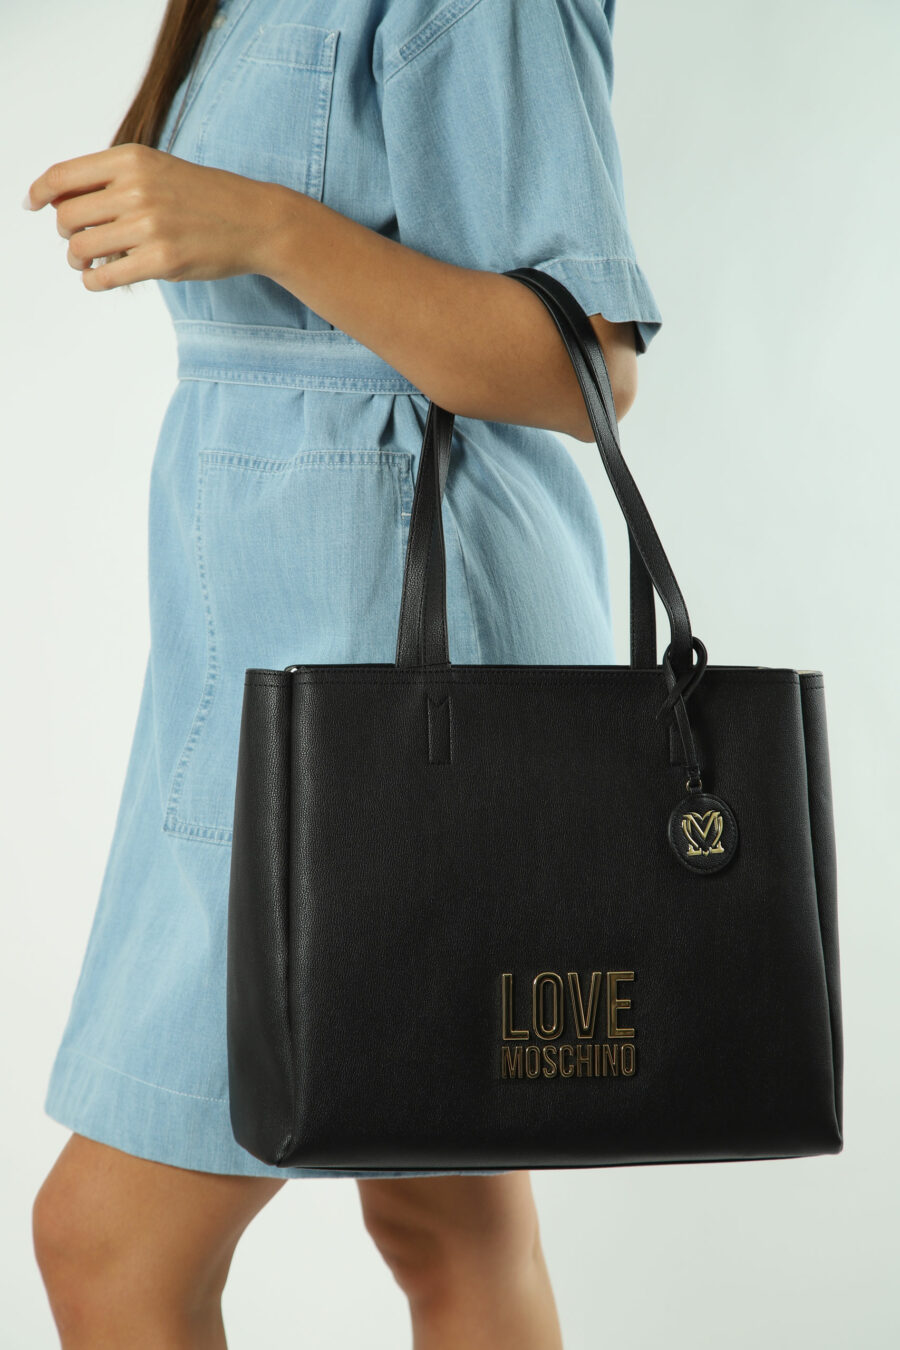 Schwarze Shopper-Tasche mit goldenem Logo-Schriftzug - Fotos 1445